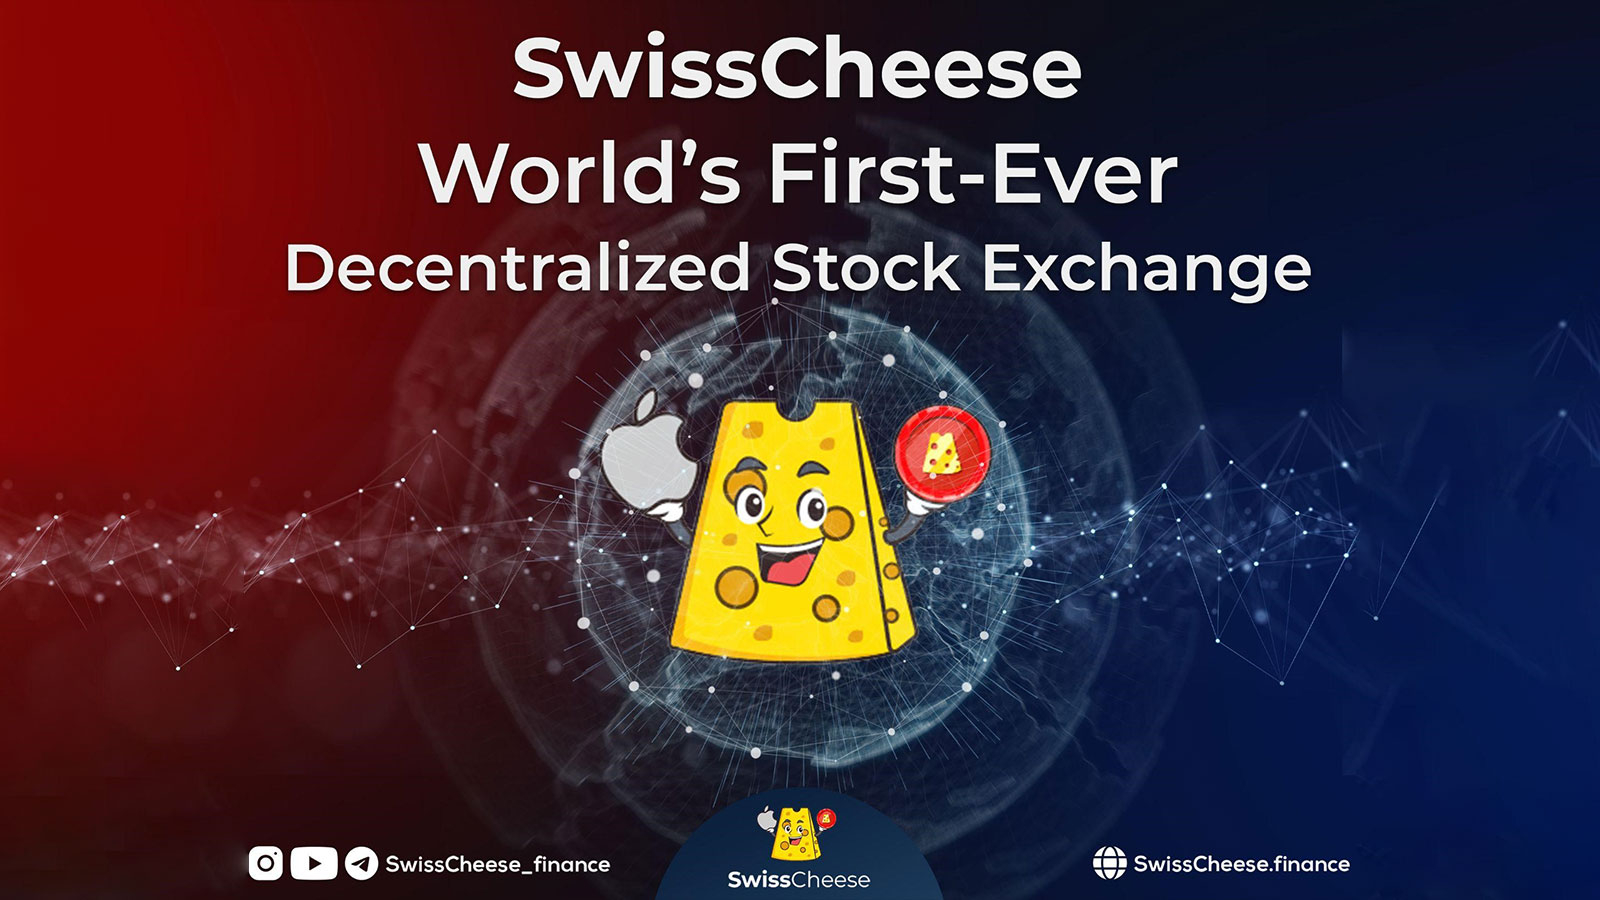 Swisscheese - World’s First-Ever Decentralized Stock Exchange